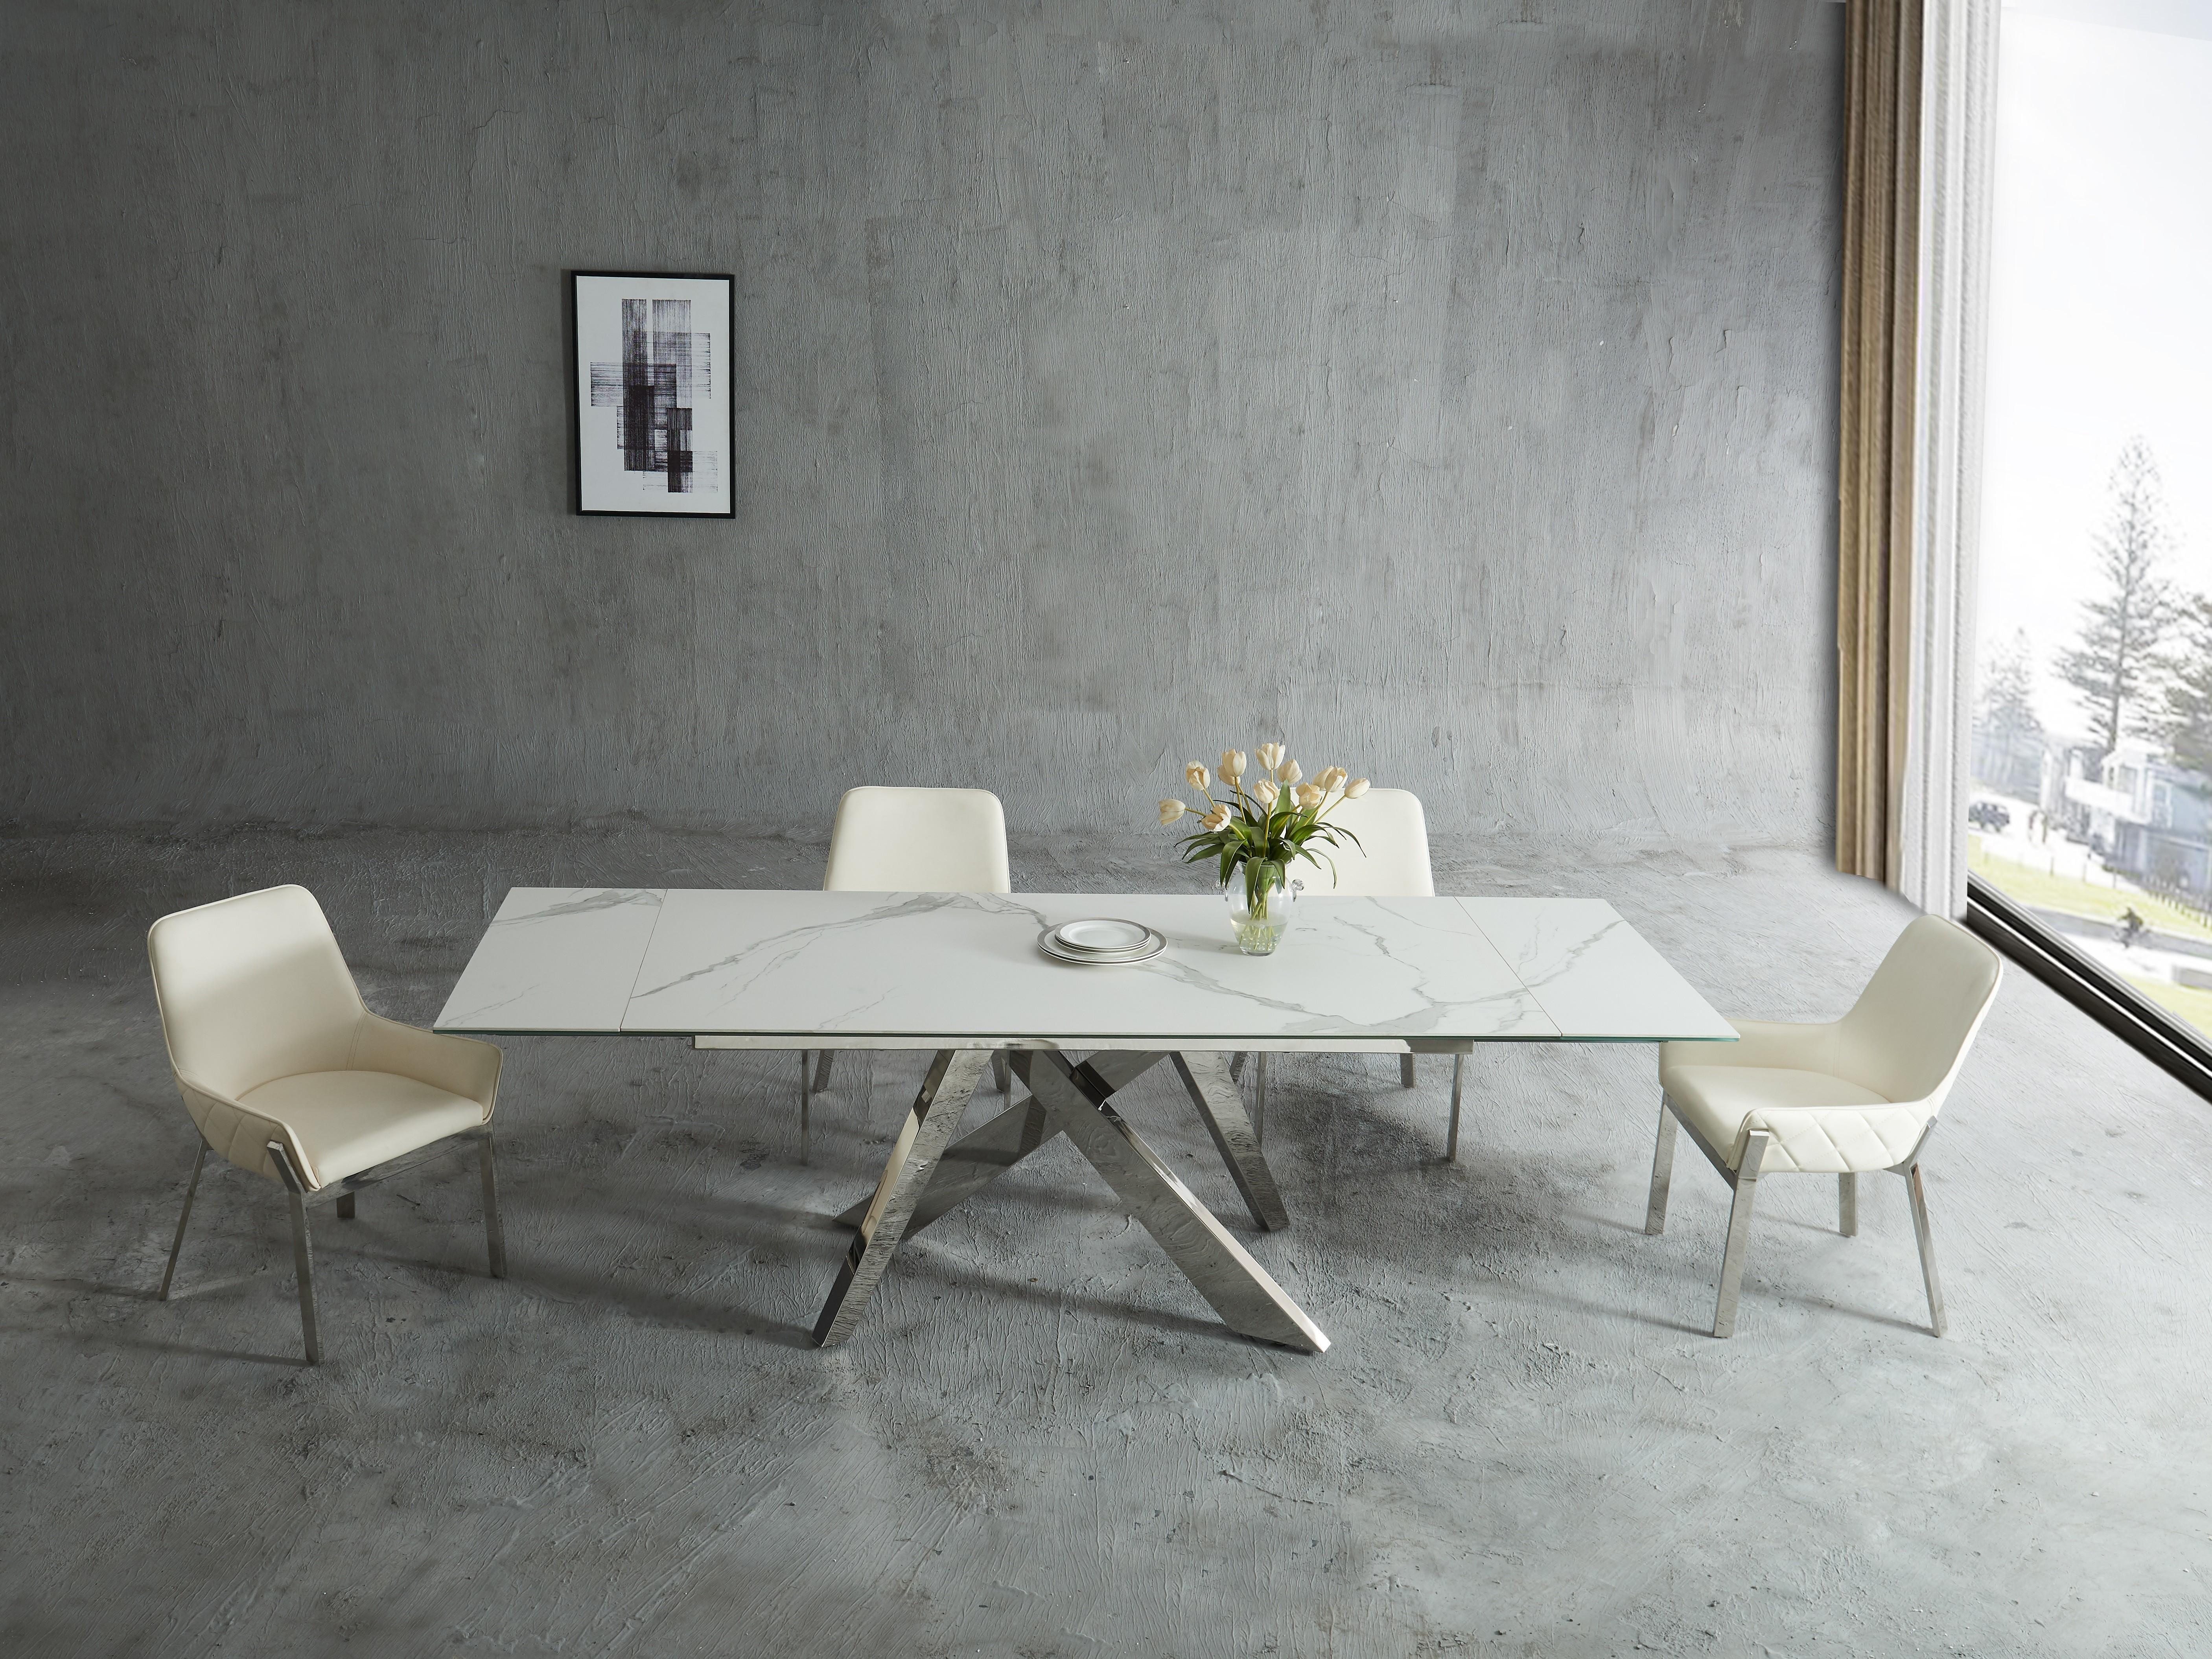 Contemporary, Modern Dining Room Set Carrara Miami 17721-9pcs in Chrome, White Eco Leather